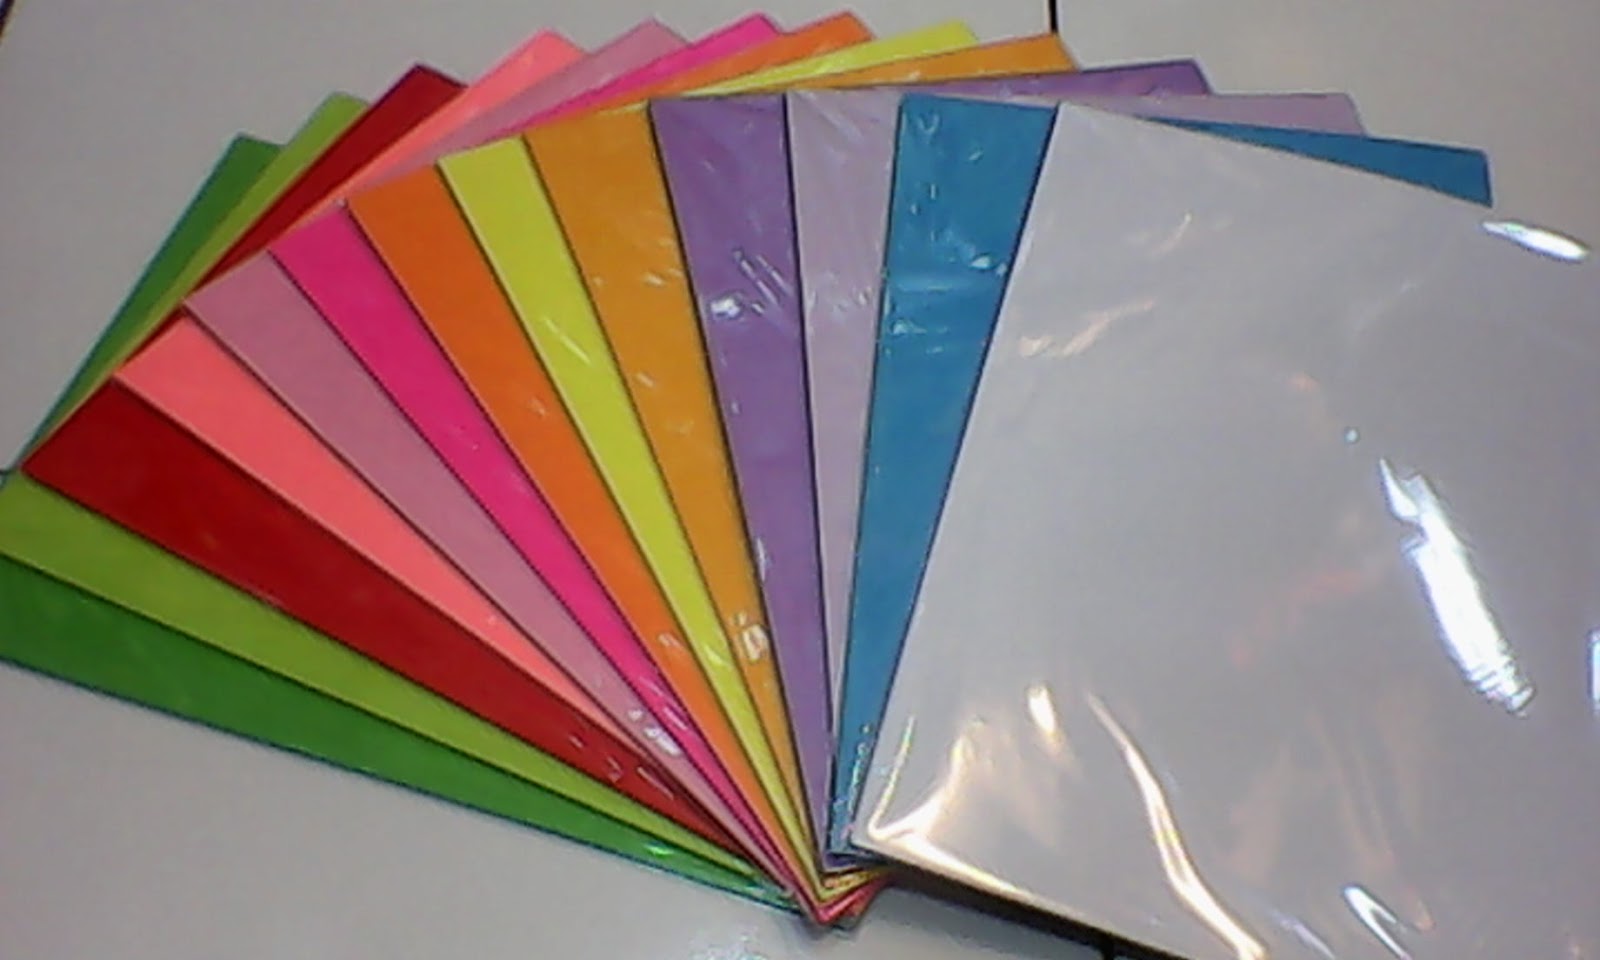  kertas  warna  warni  spektra A4 80 gram